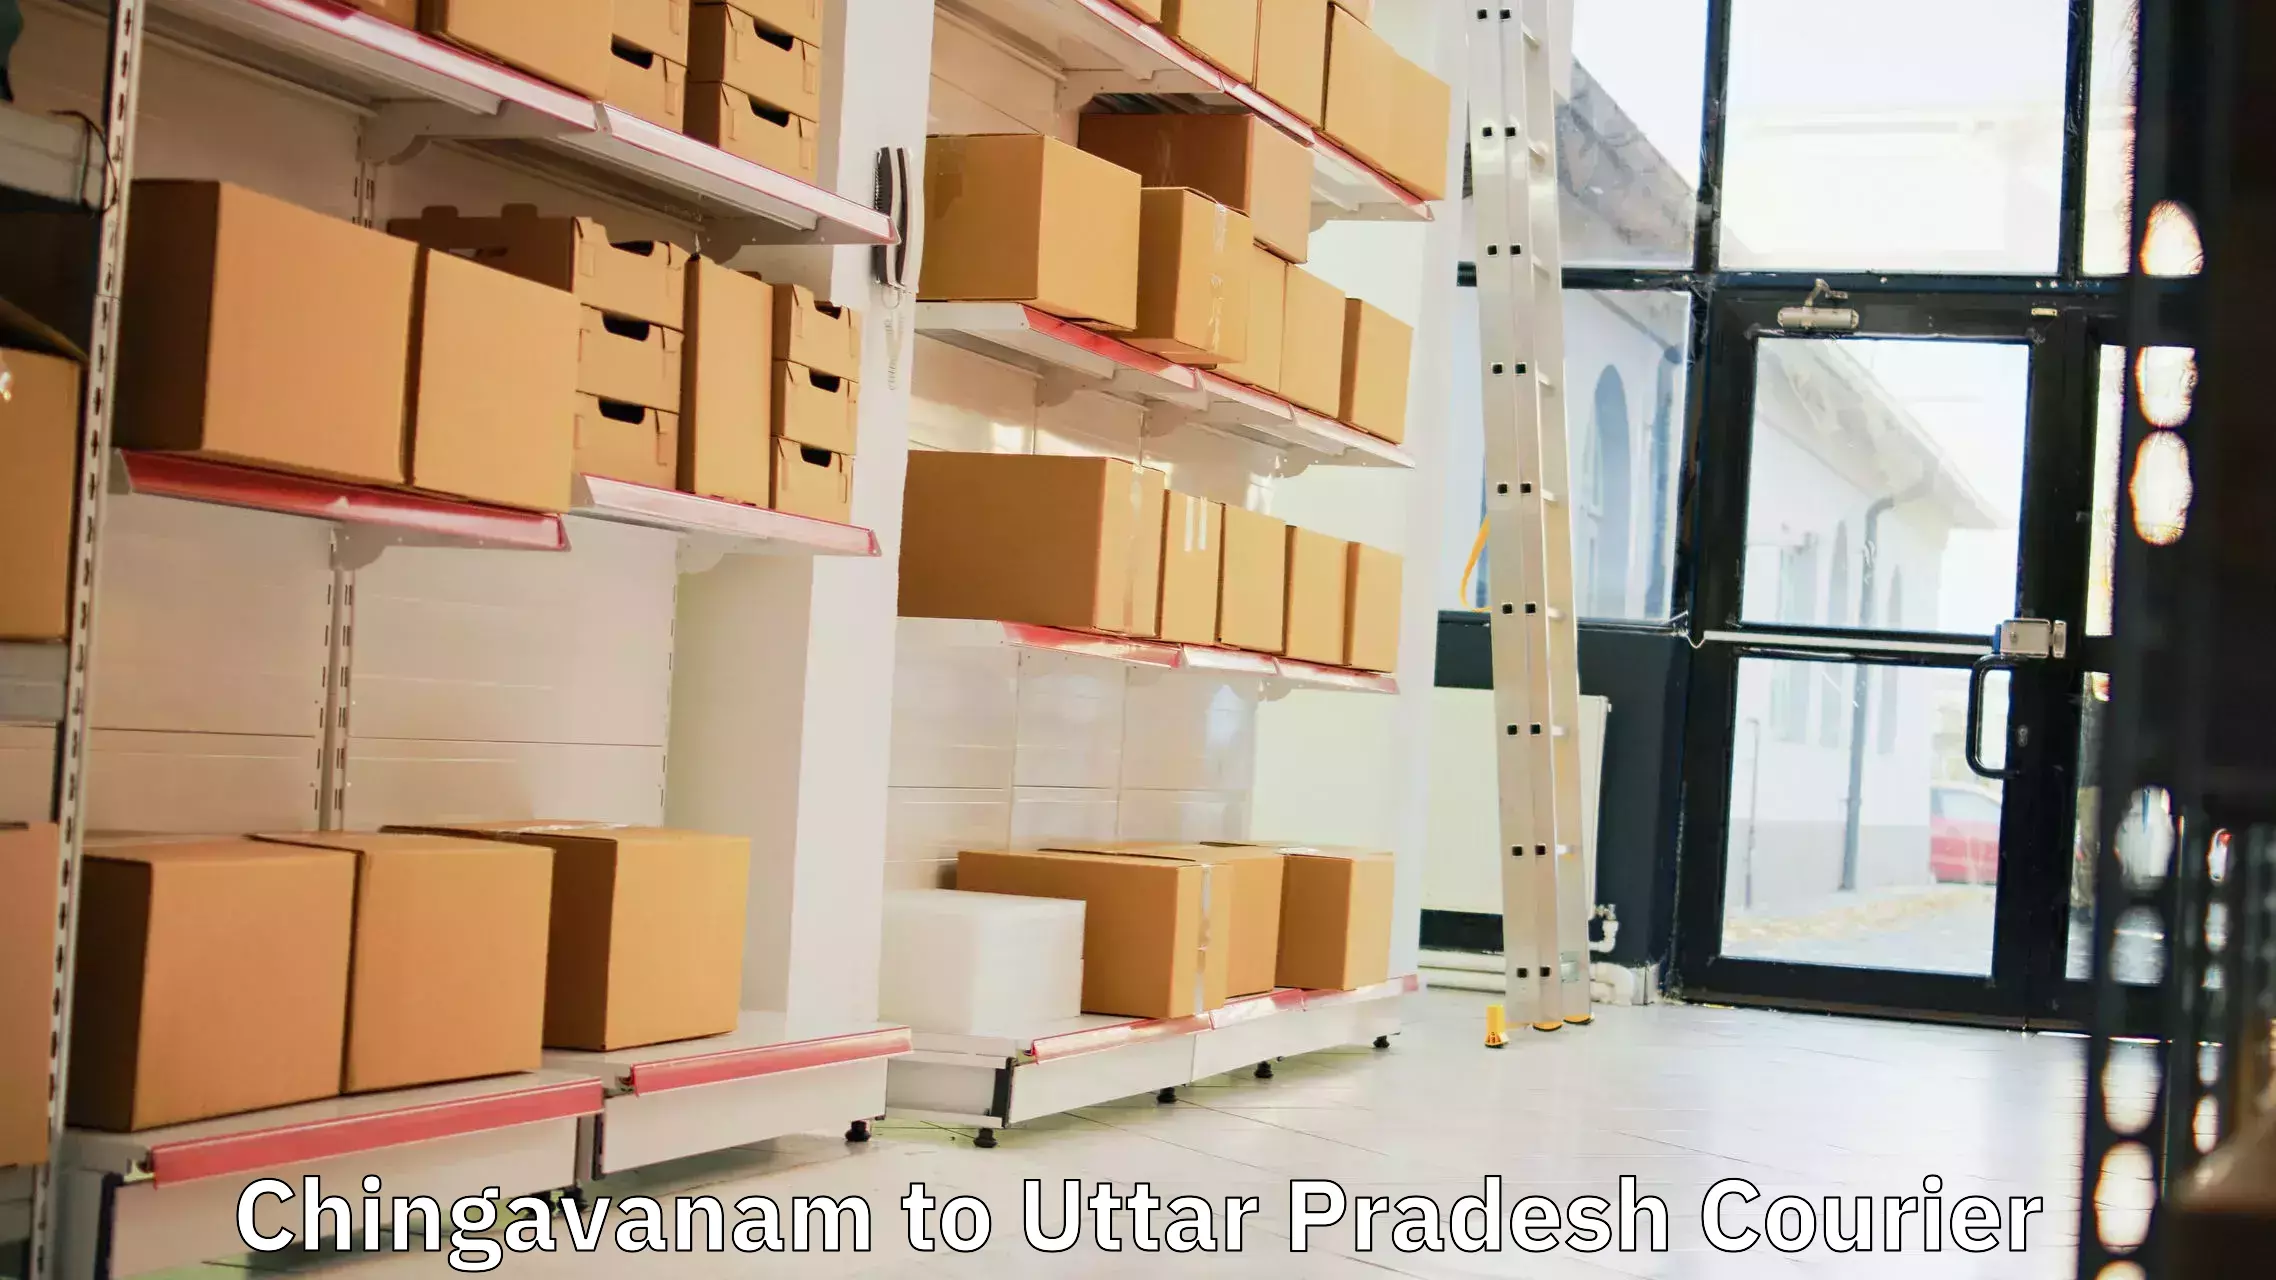 Customizable delivery plans Chingavanam to Vrindavan